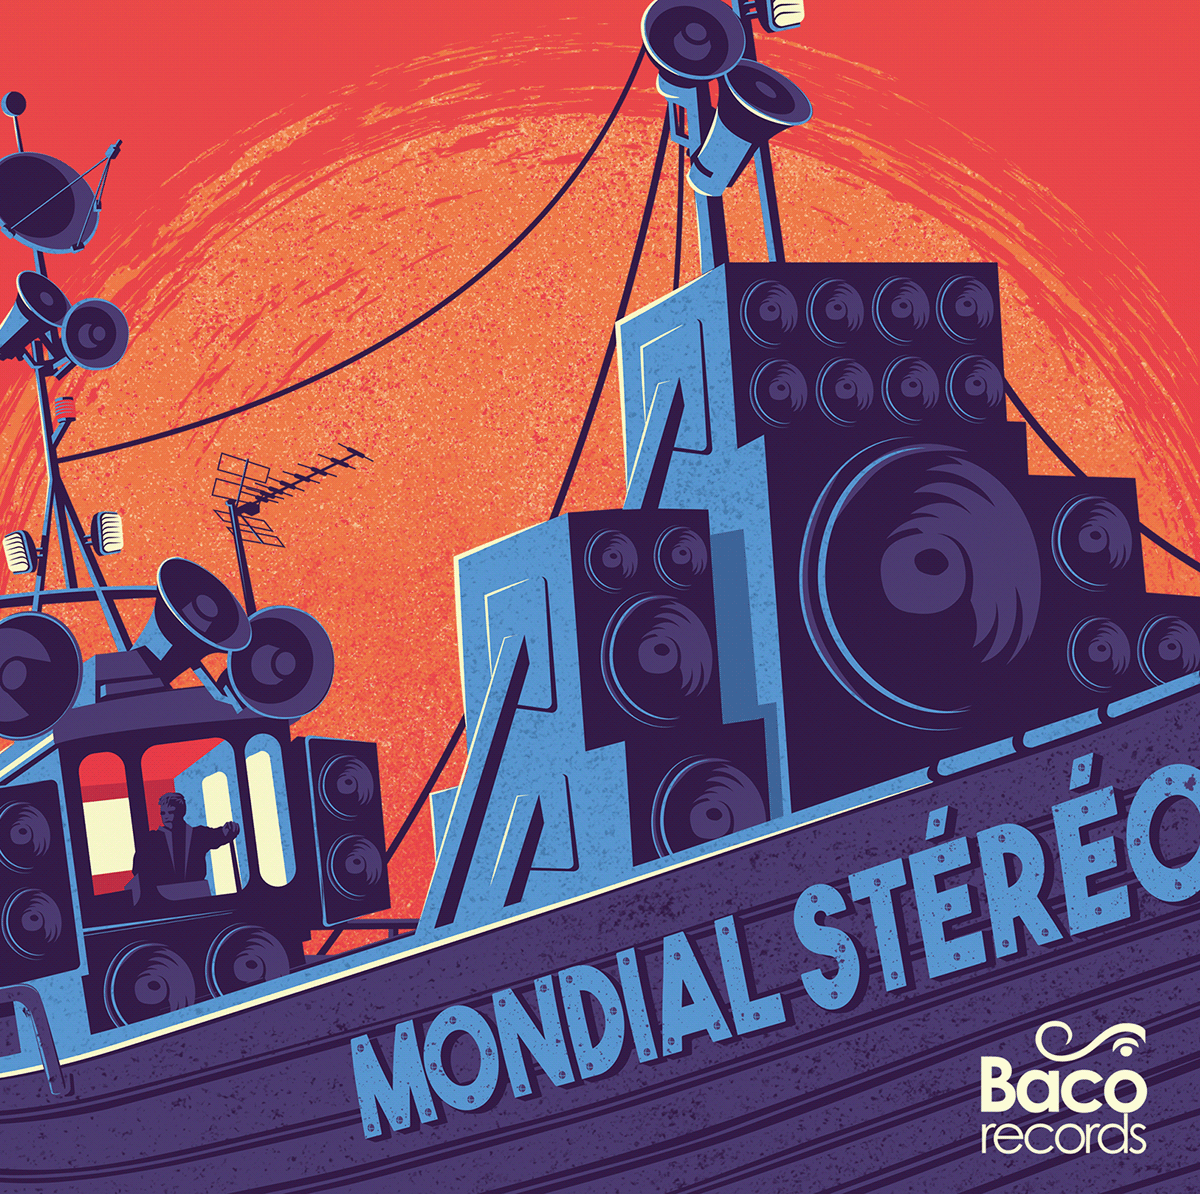 BACO hurlements Leo Label cover Album music boat stereo Mondial